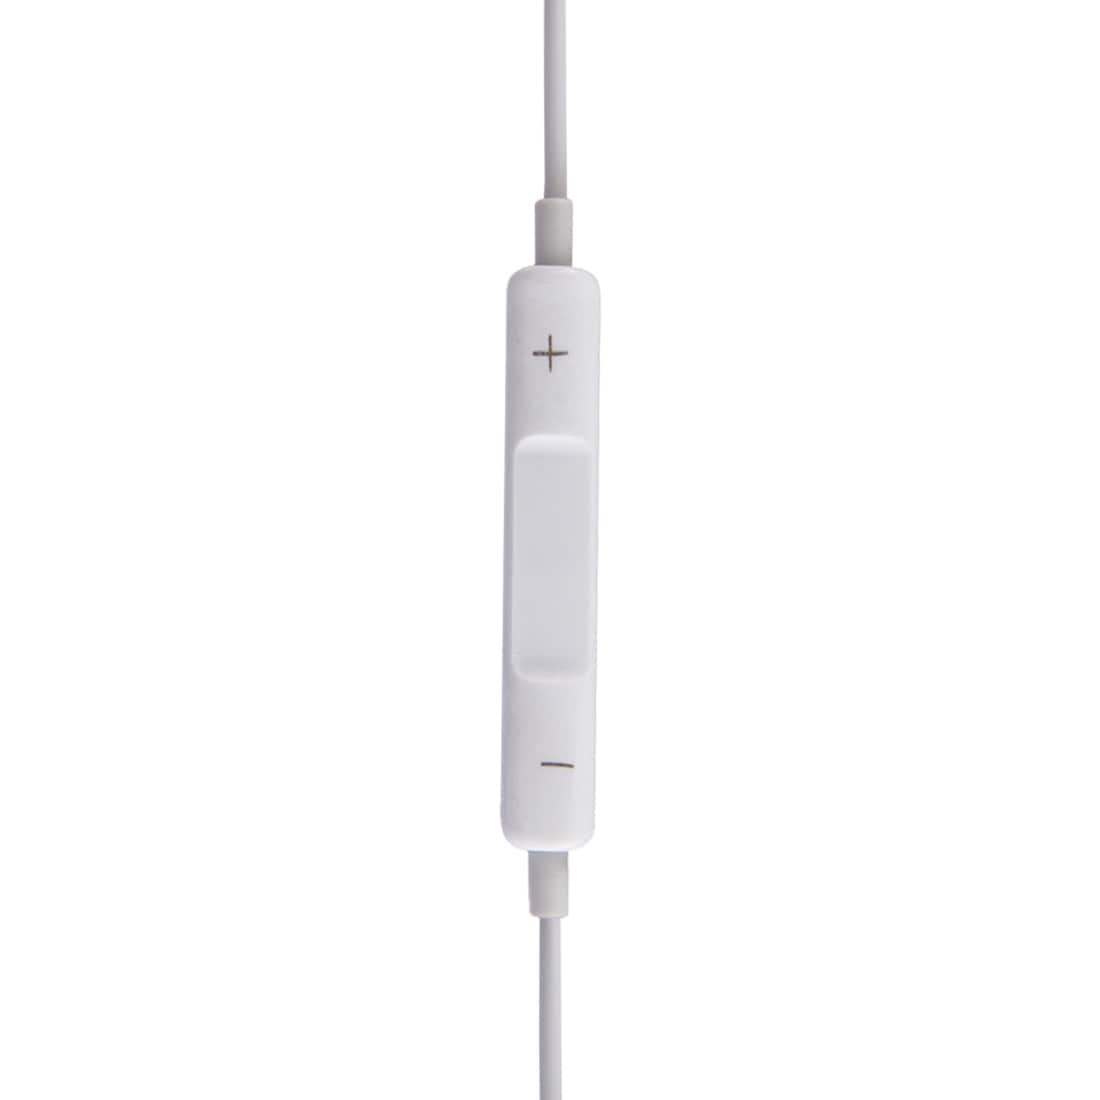 In-Ear mobil headset med fjärr & Mic - iPhone, Samsung, HTC, Sony mm